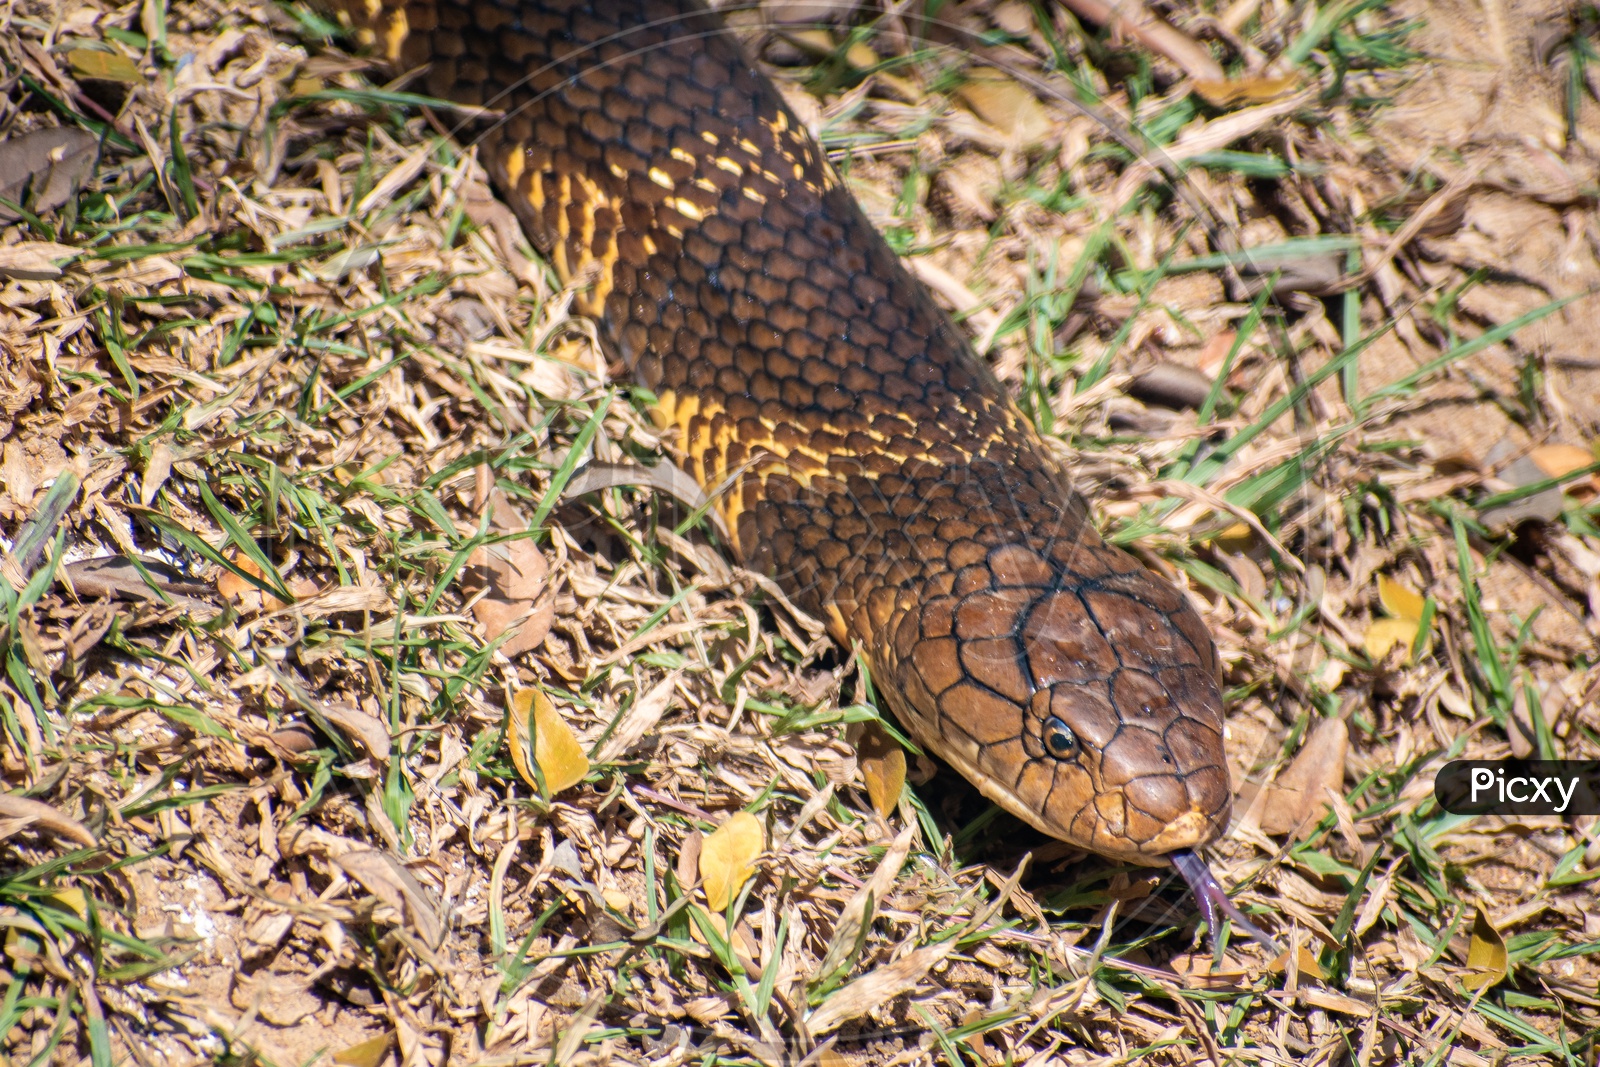 Poisonous snake in Bannerghatta National Park, Bengaluru.